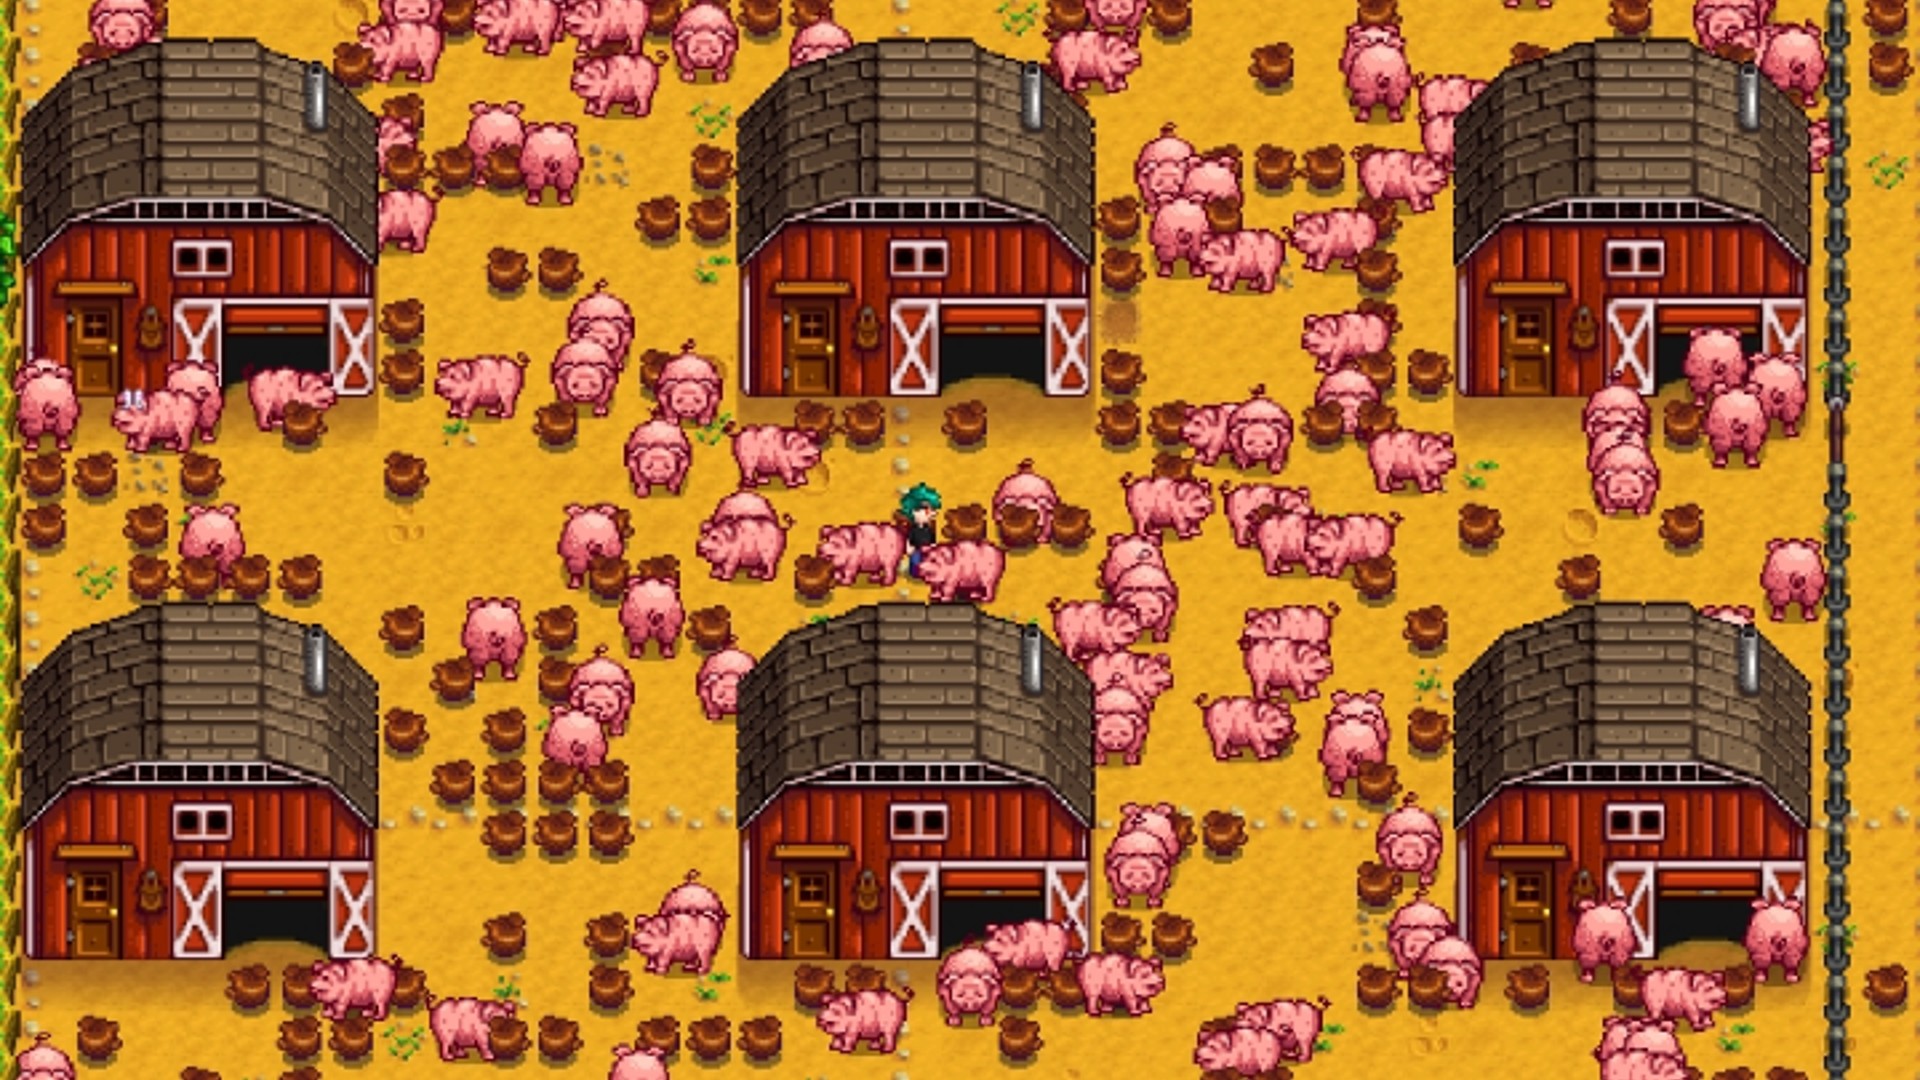 pig farming set up